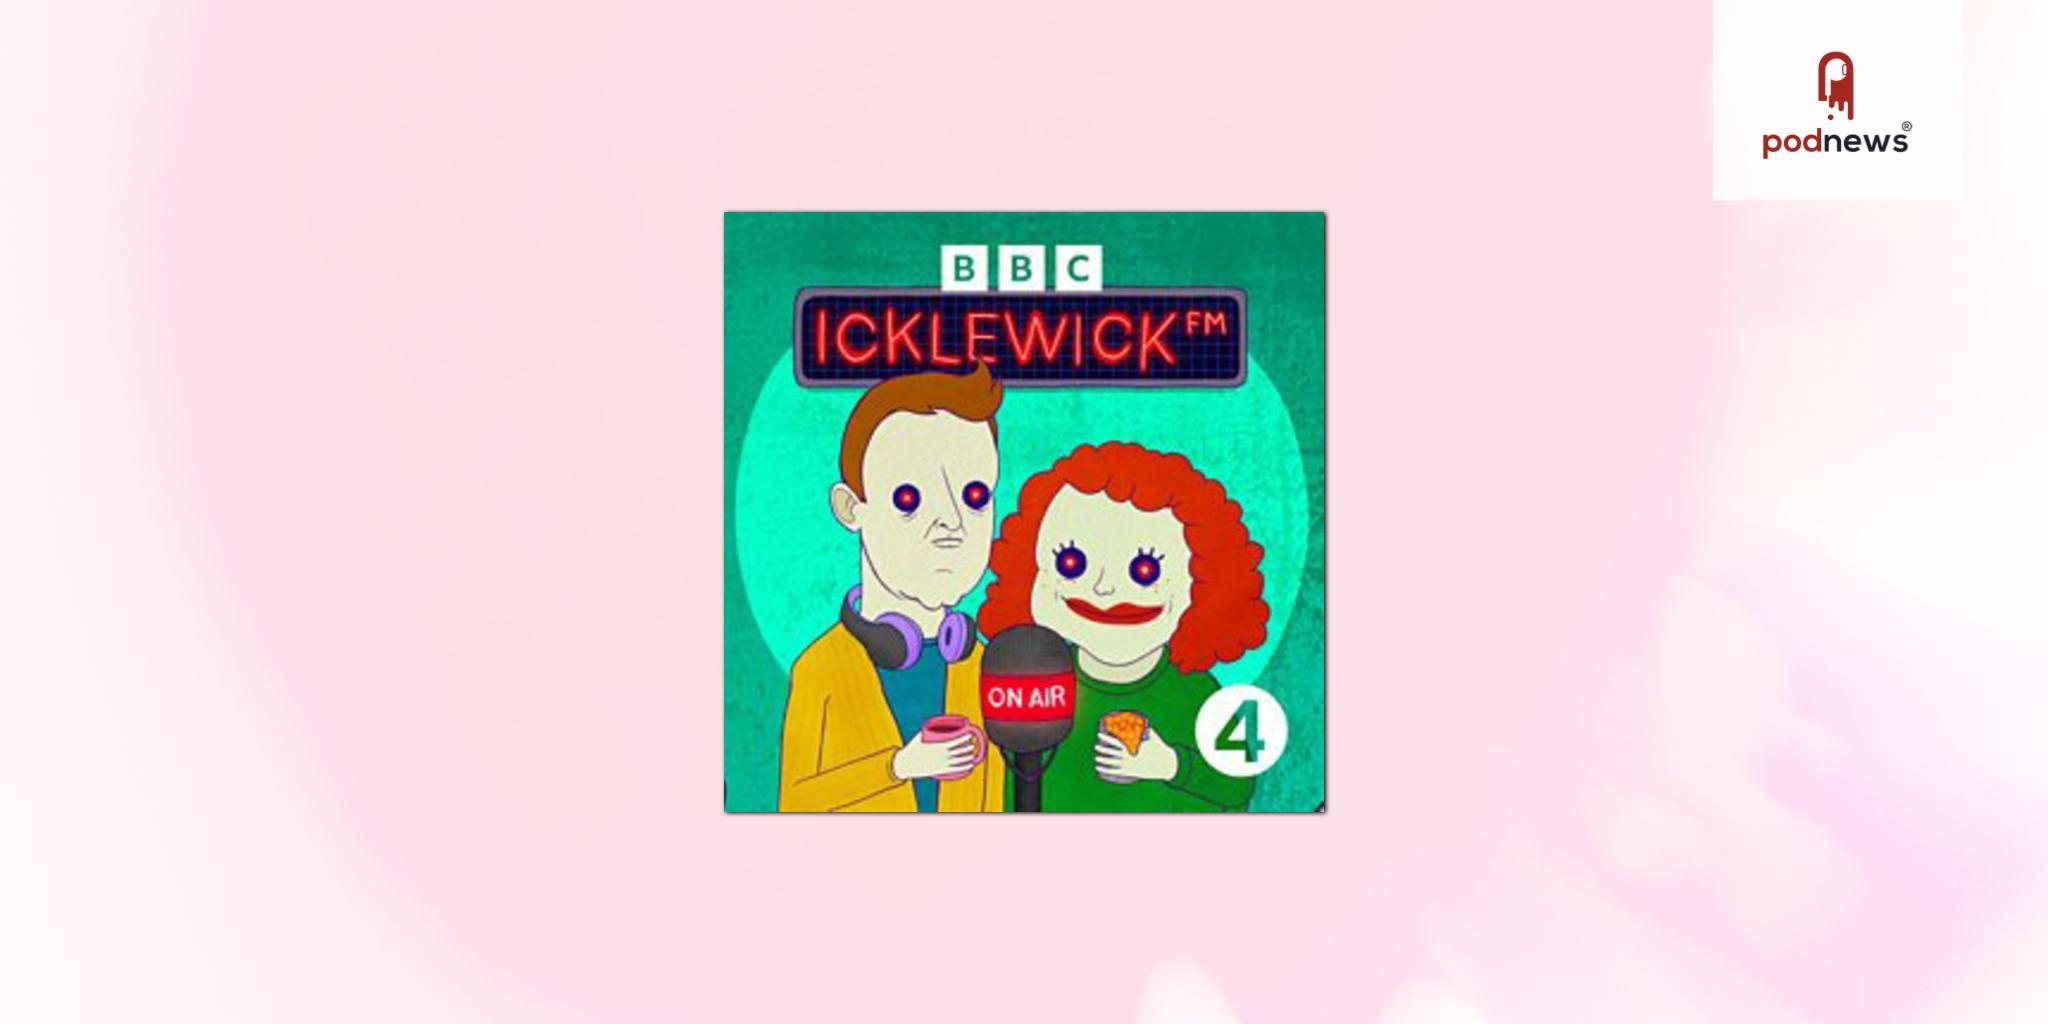 BBC Radio 4 launches new podcast feed, Jokes, showcasing best original comedy